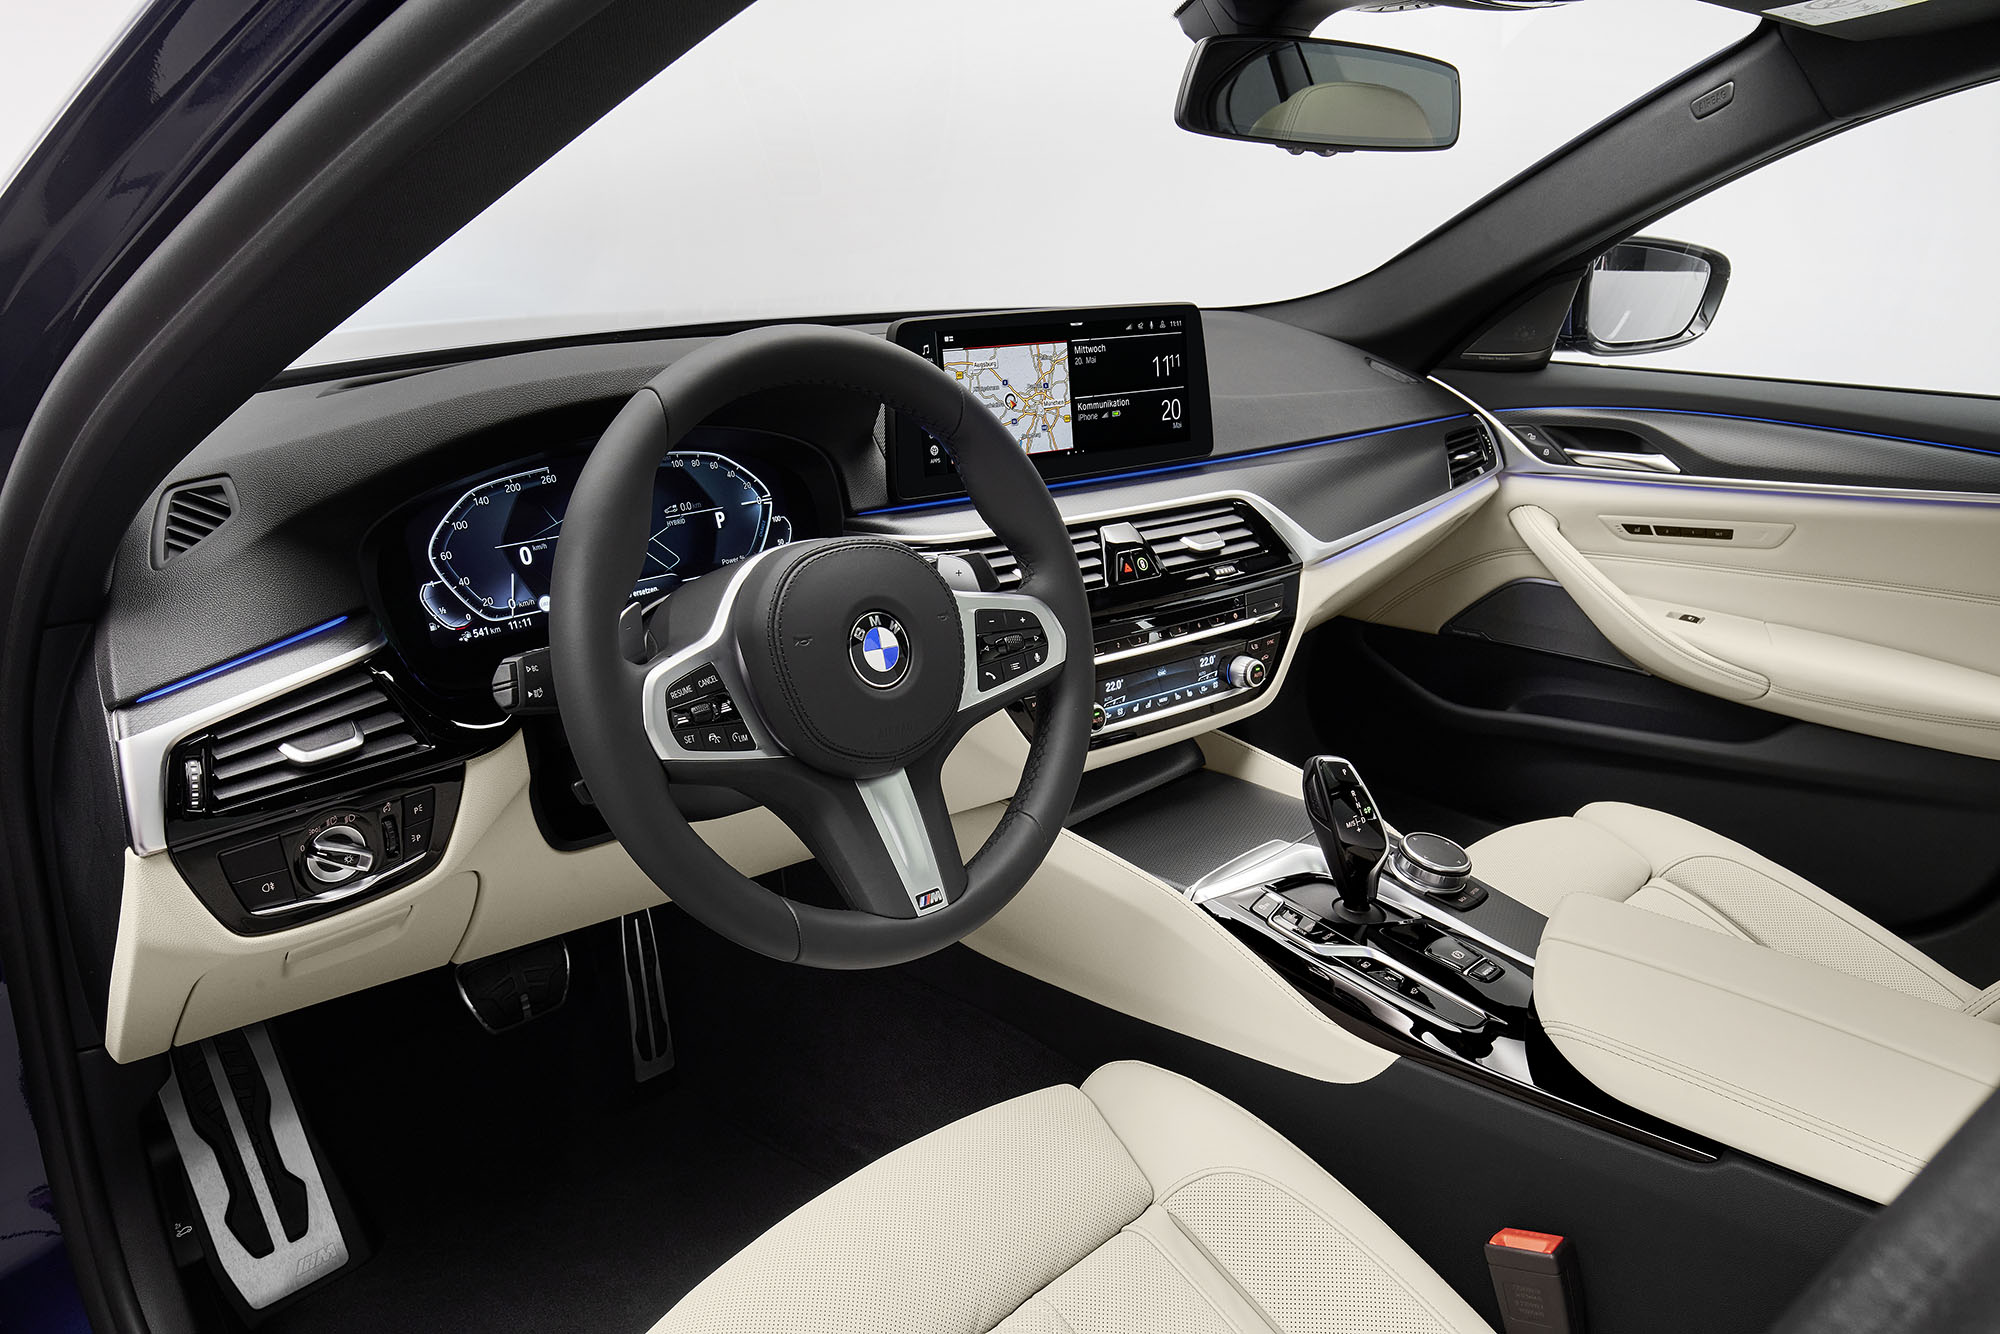 BMW 5 Series interior in white